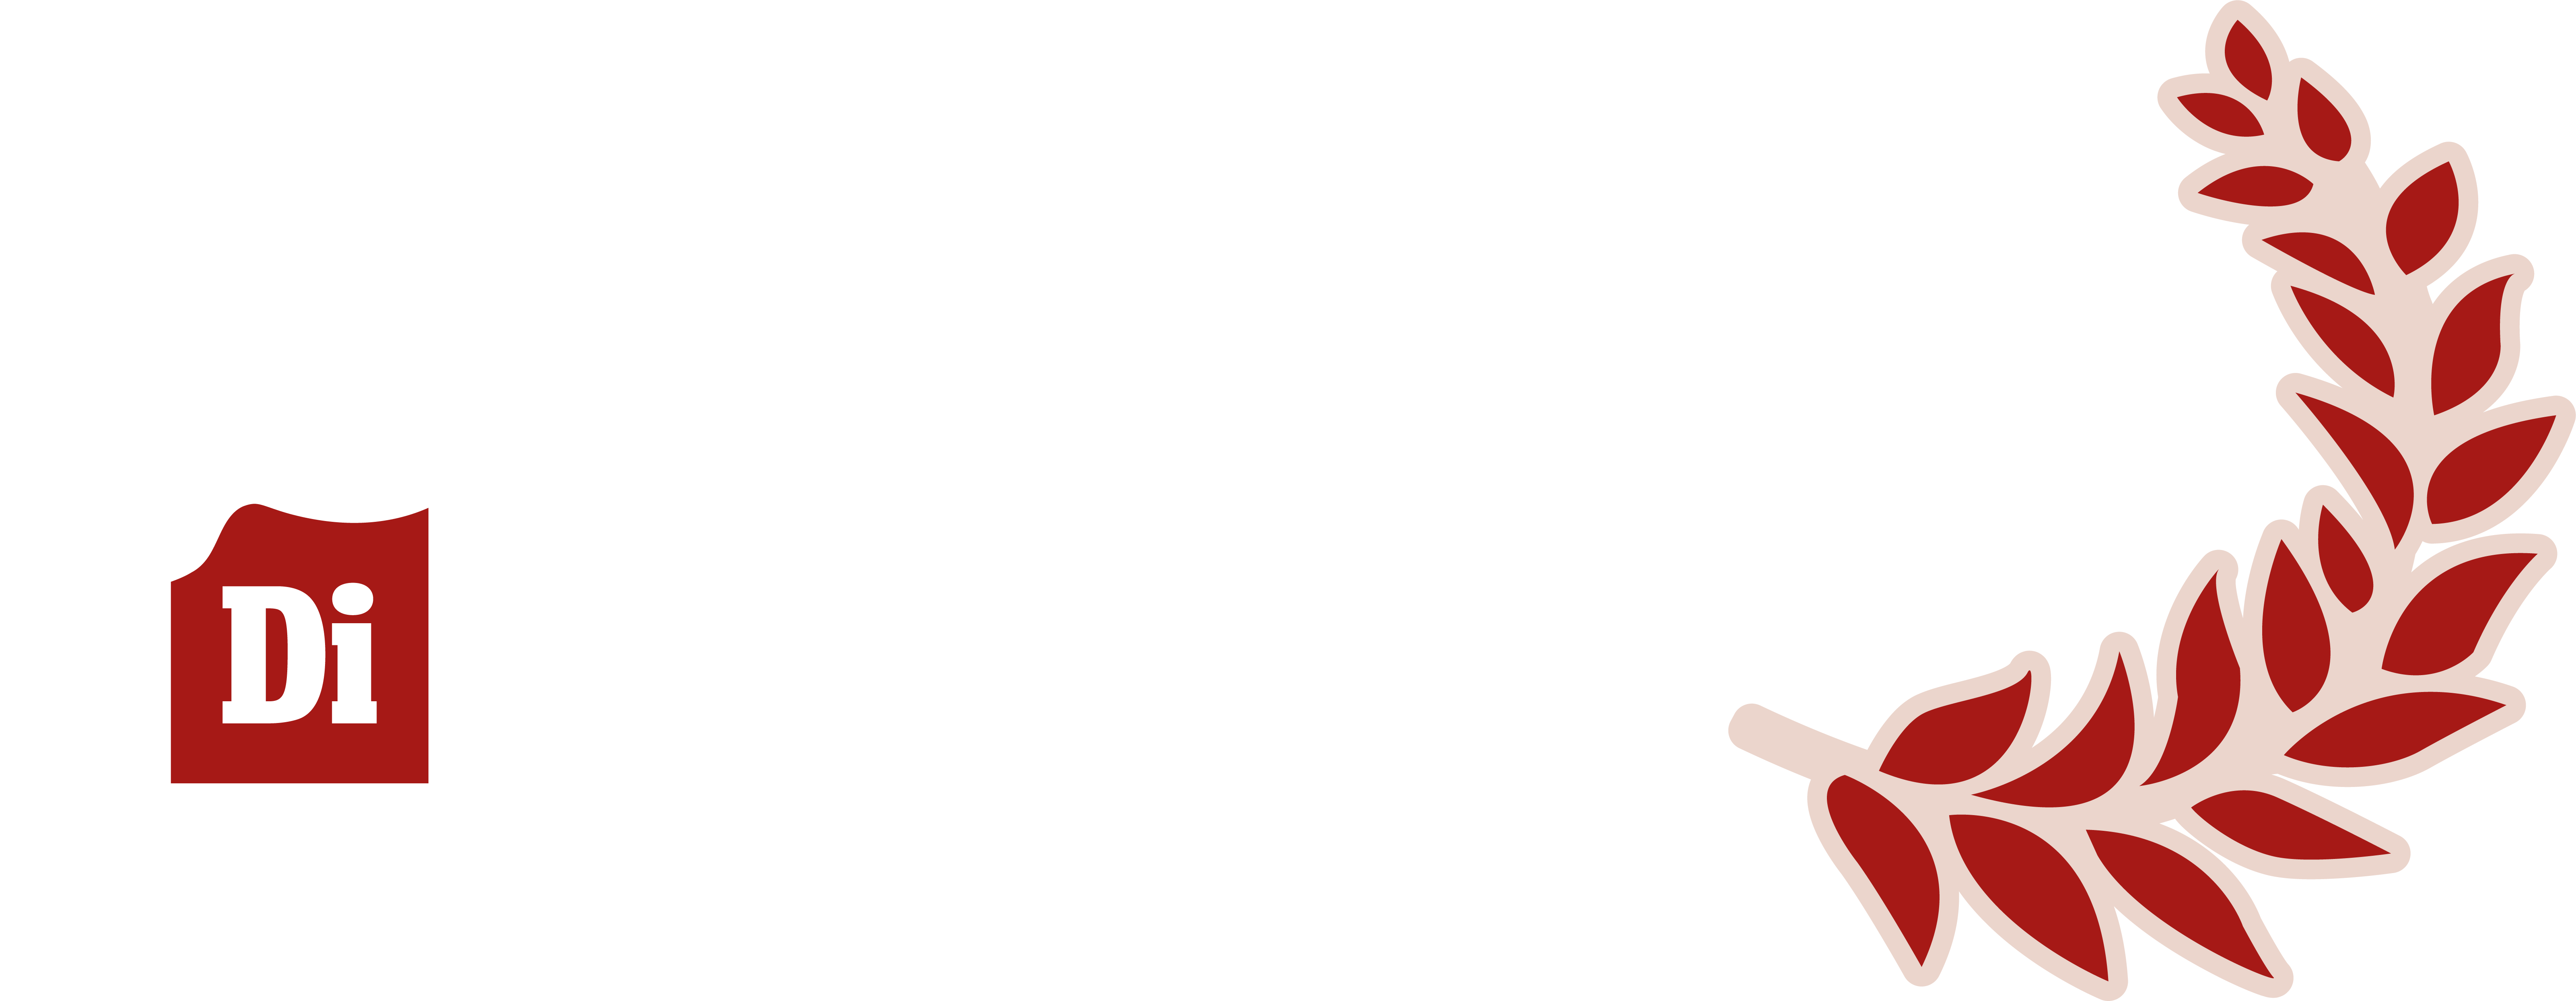 Gasell logo rgb liggande krans 2022 white